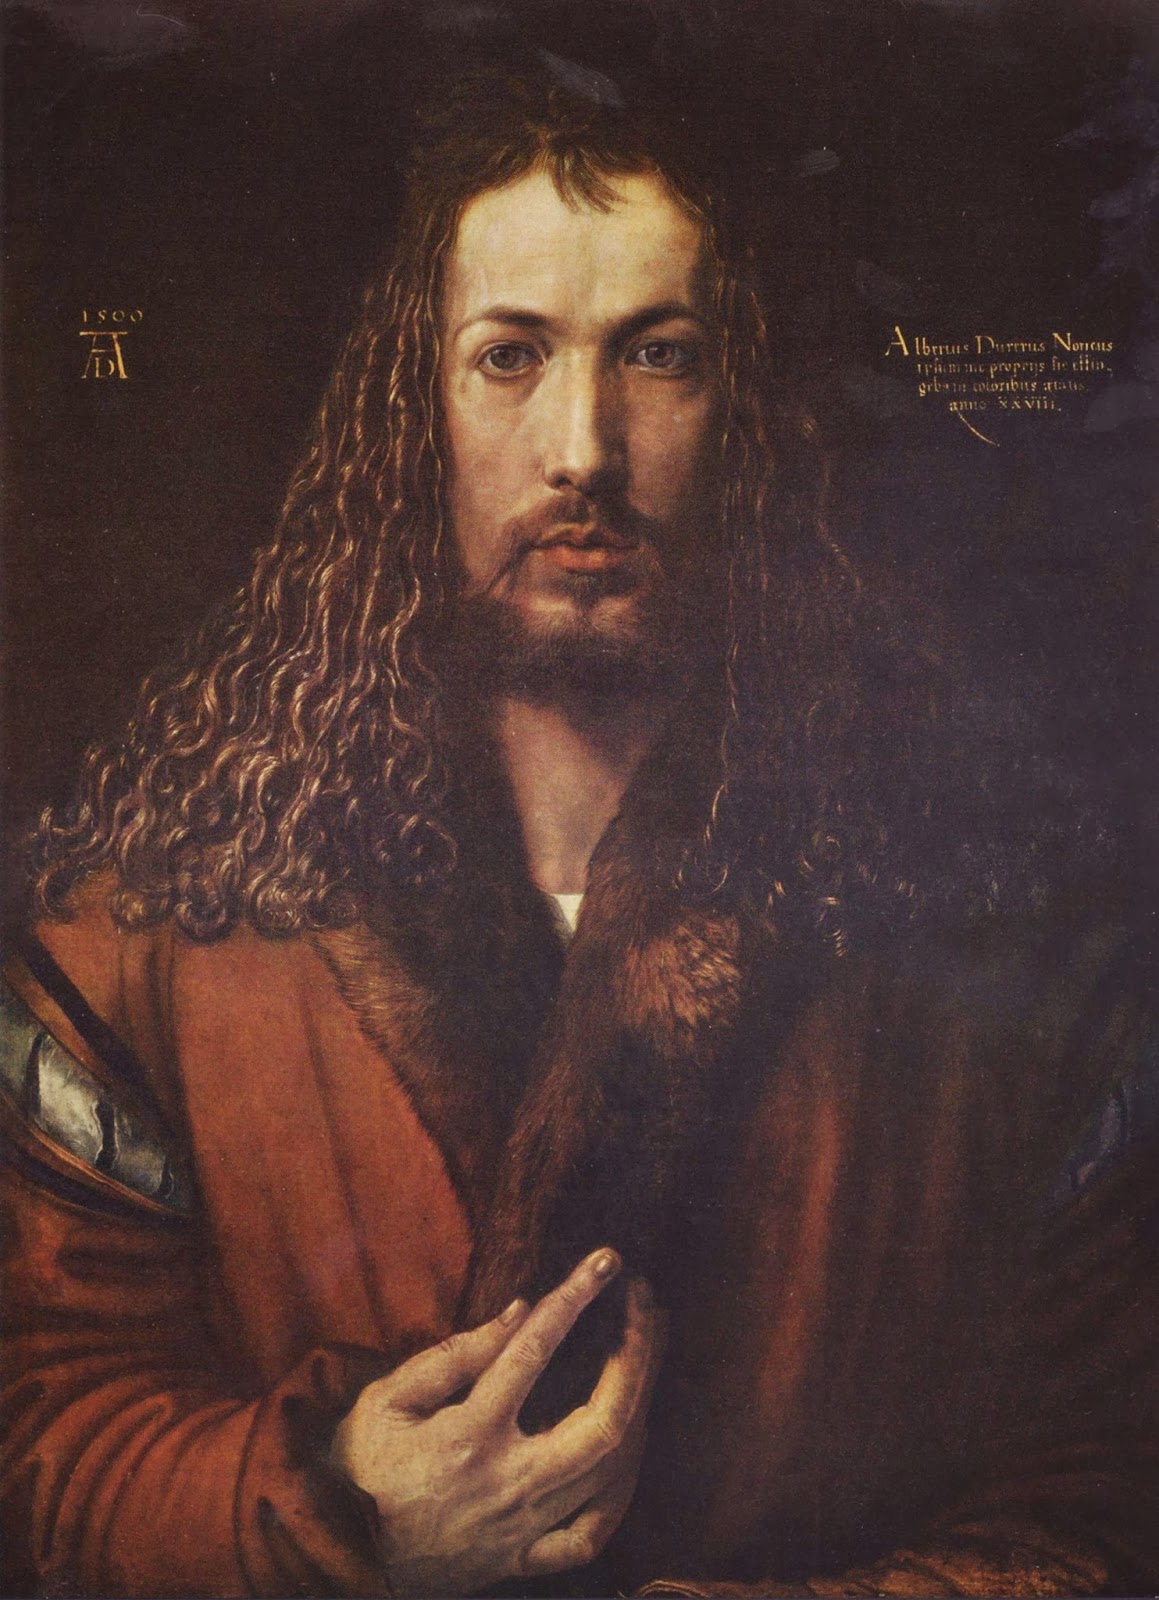 More than just wine: Albrecht Dürer, landscapes and portraits